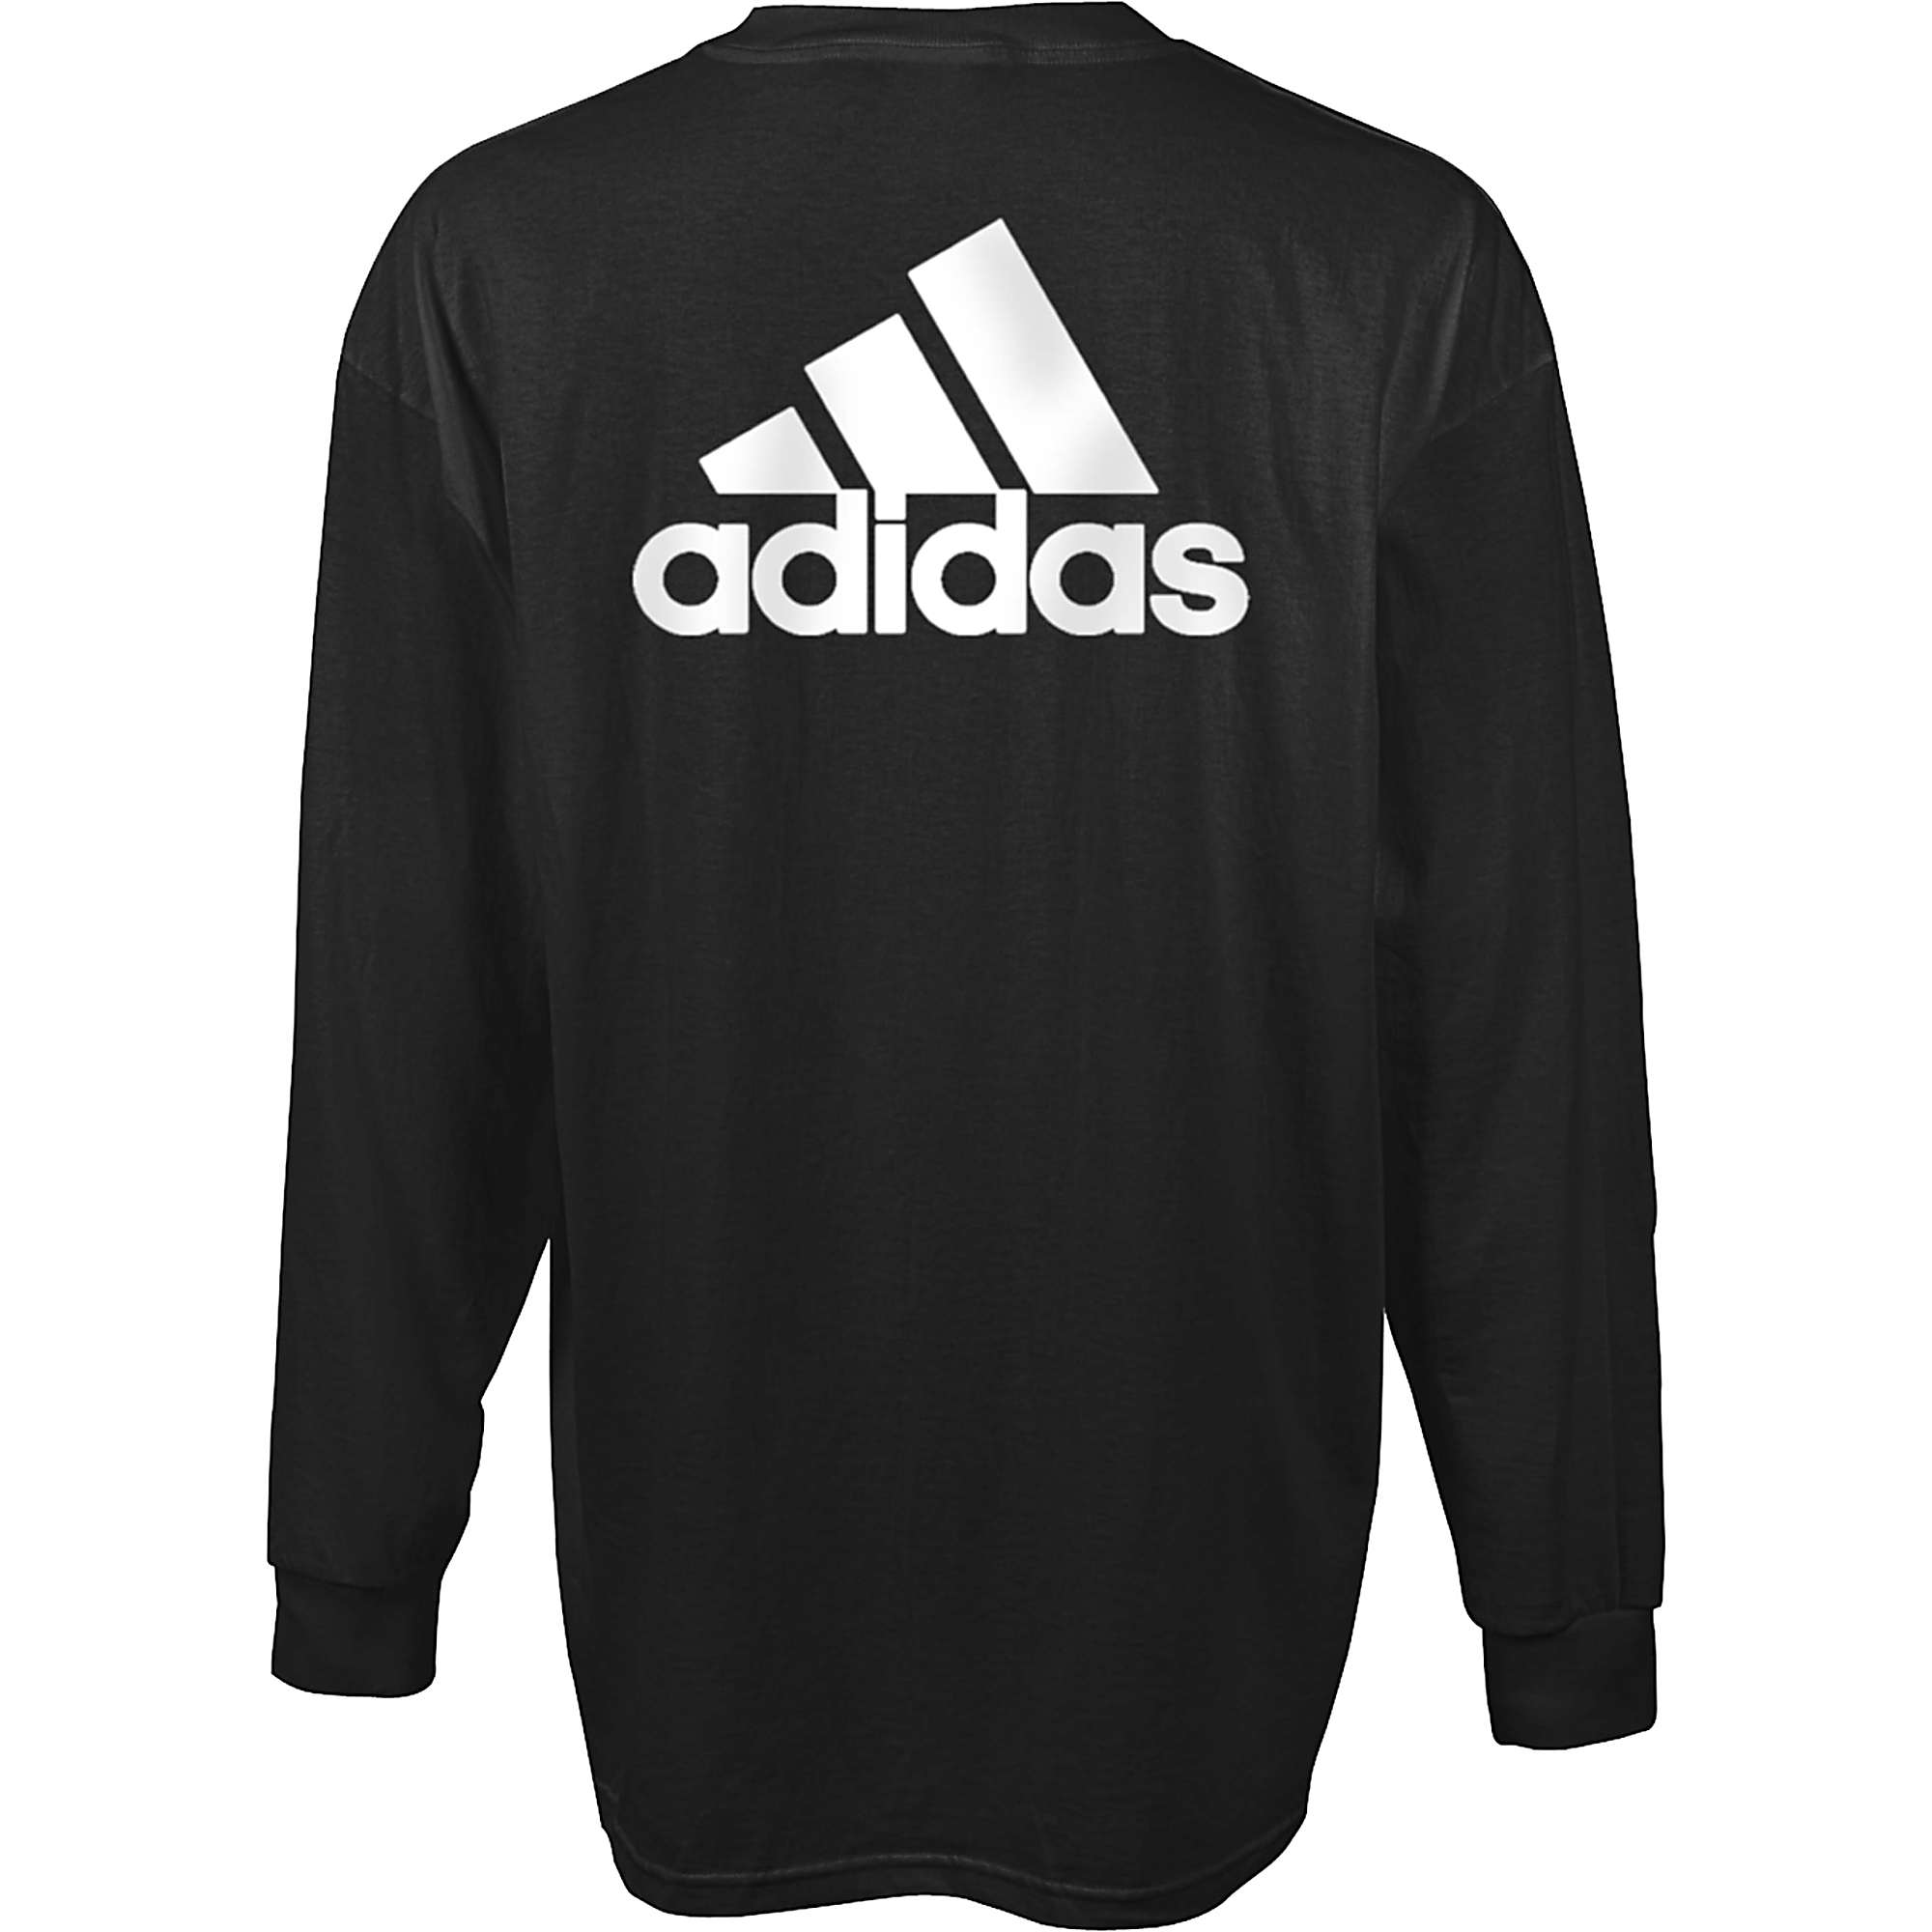 Adidas Men's Long Sleeve Graphic Logo T-Shirt | eBay